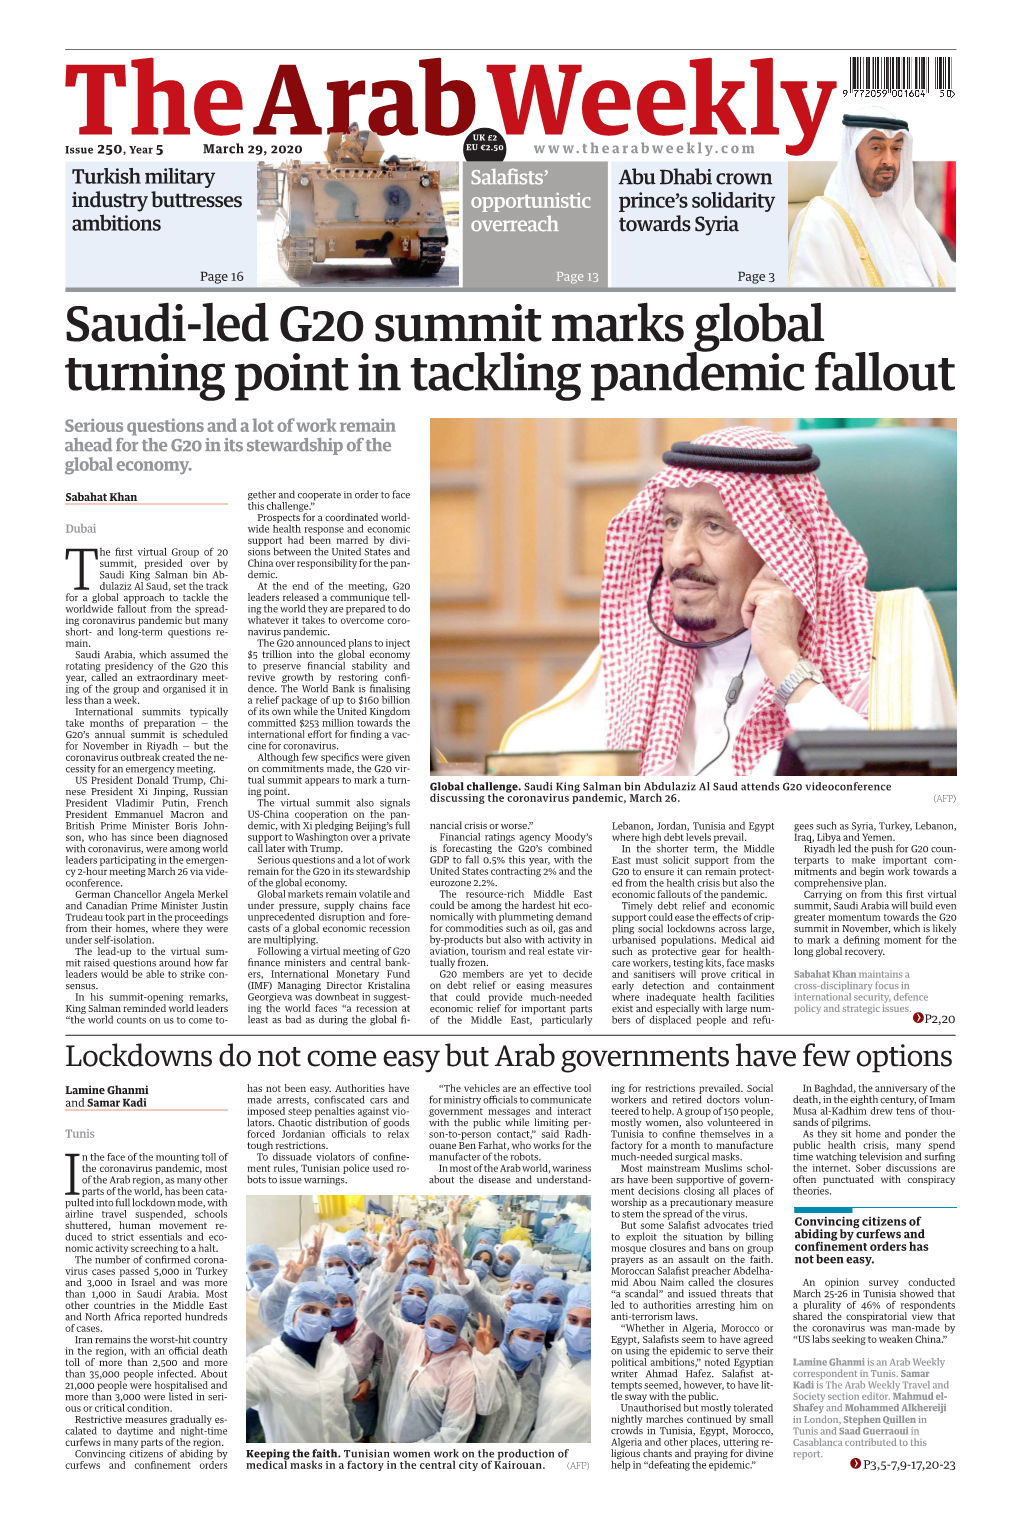 Saudi-Led G20 Summit Marks Global Turning Point in Tackling Pandemic